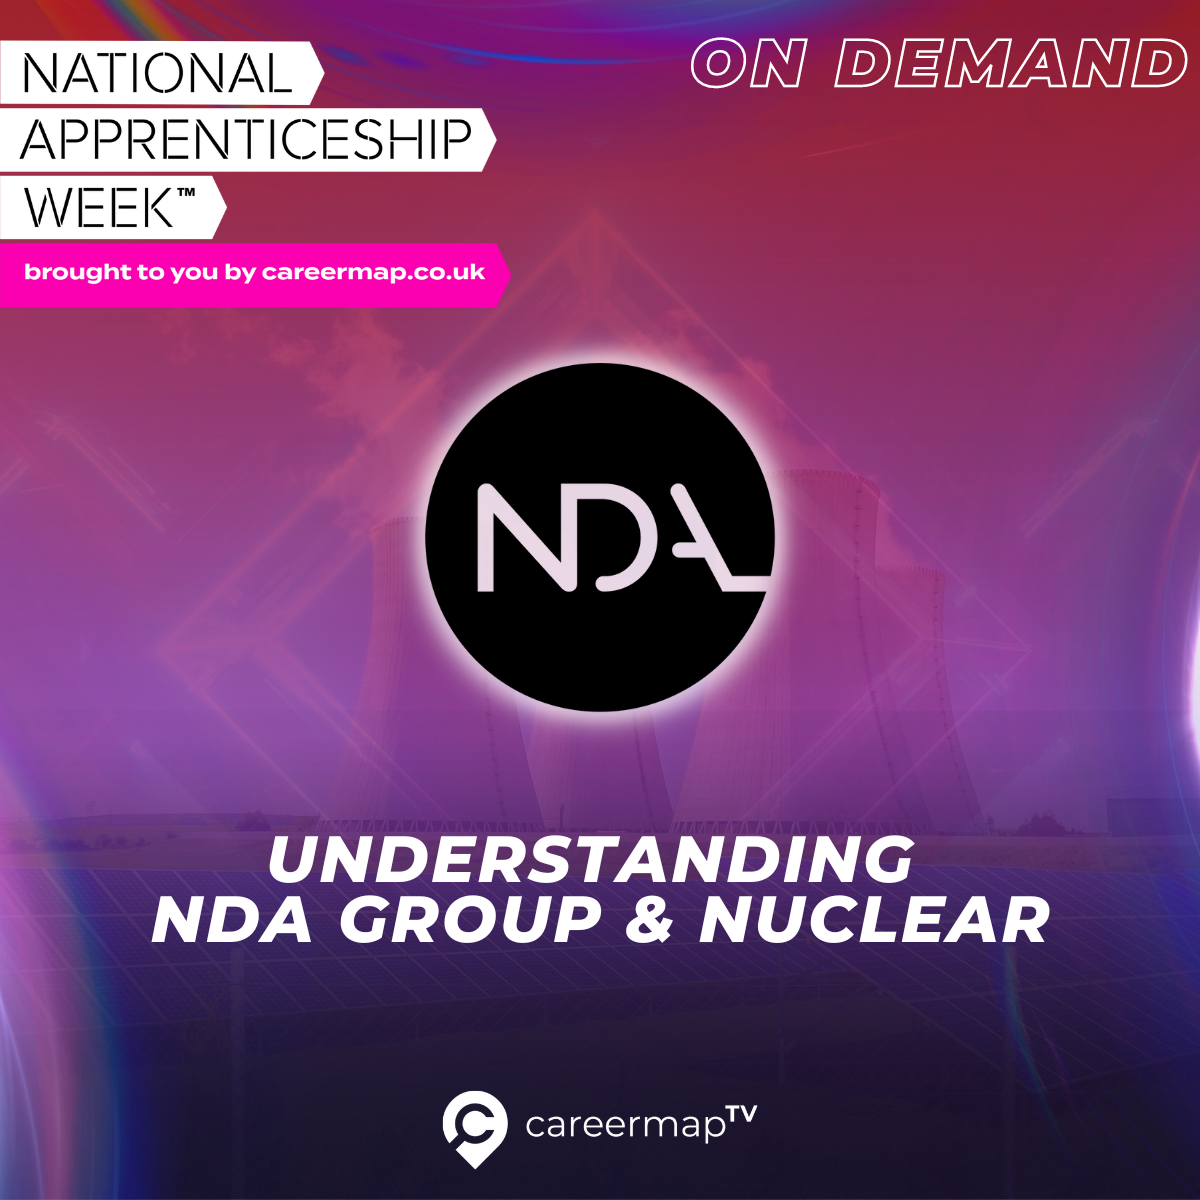 NDA event image